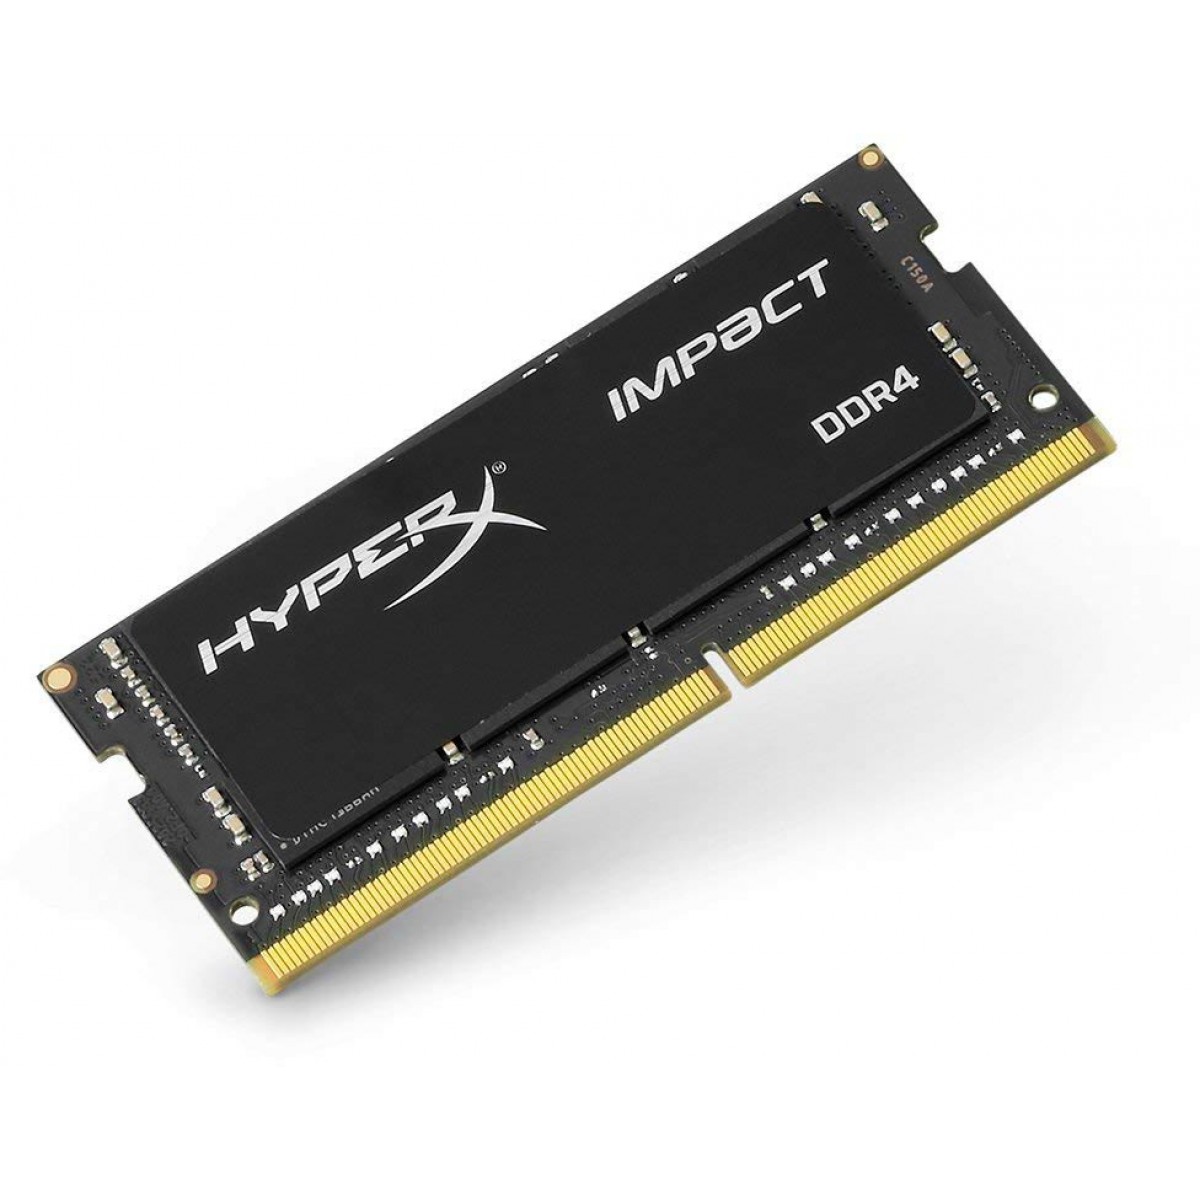 Memória para Notebook DDR4 Kingston HyperX Impact, 8GB 3600MHz, HX436C17PB4/8